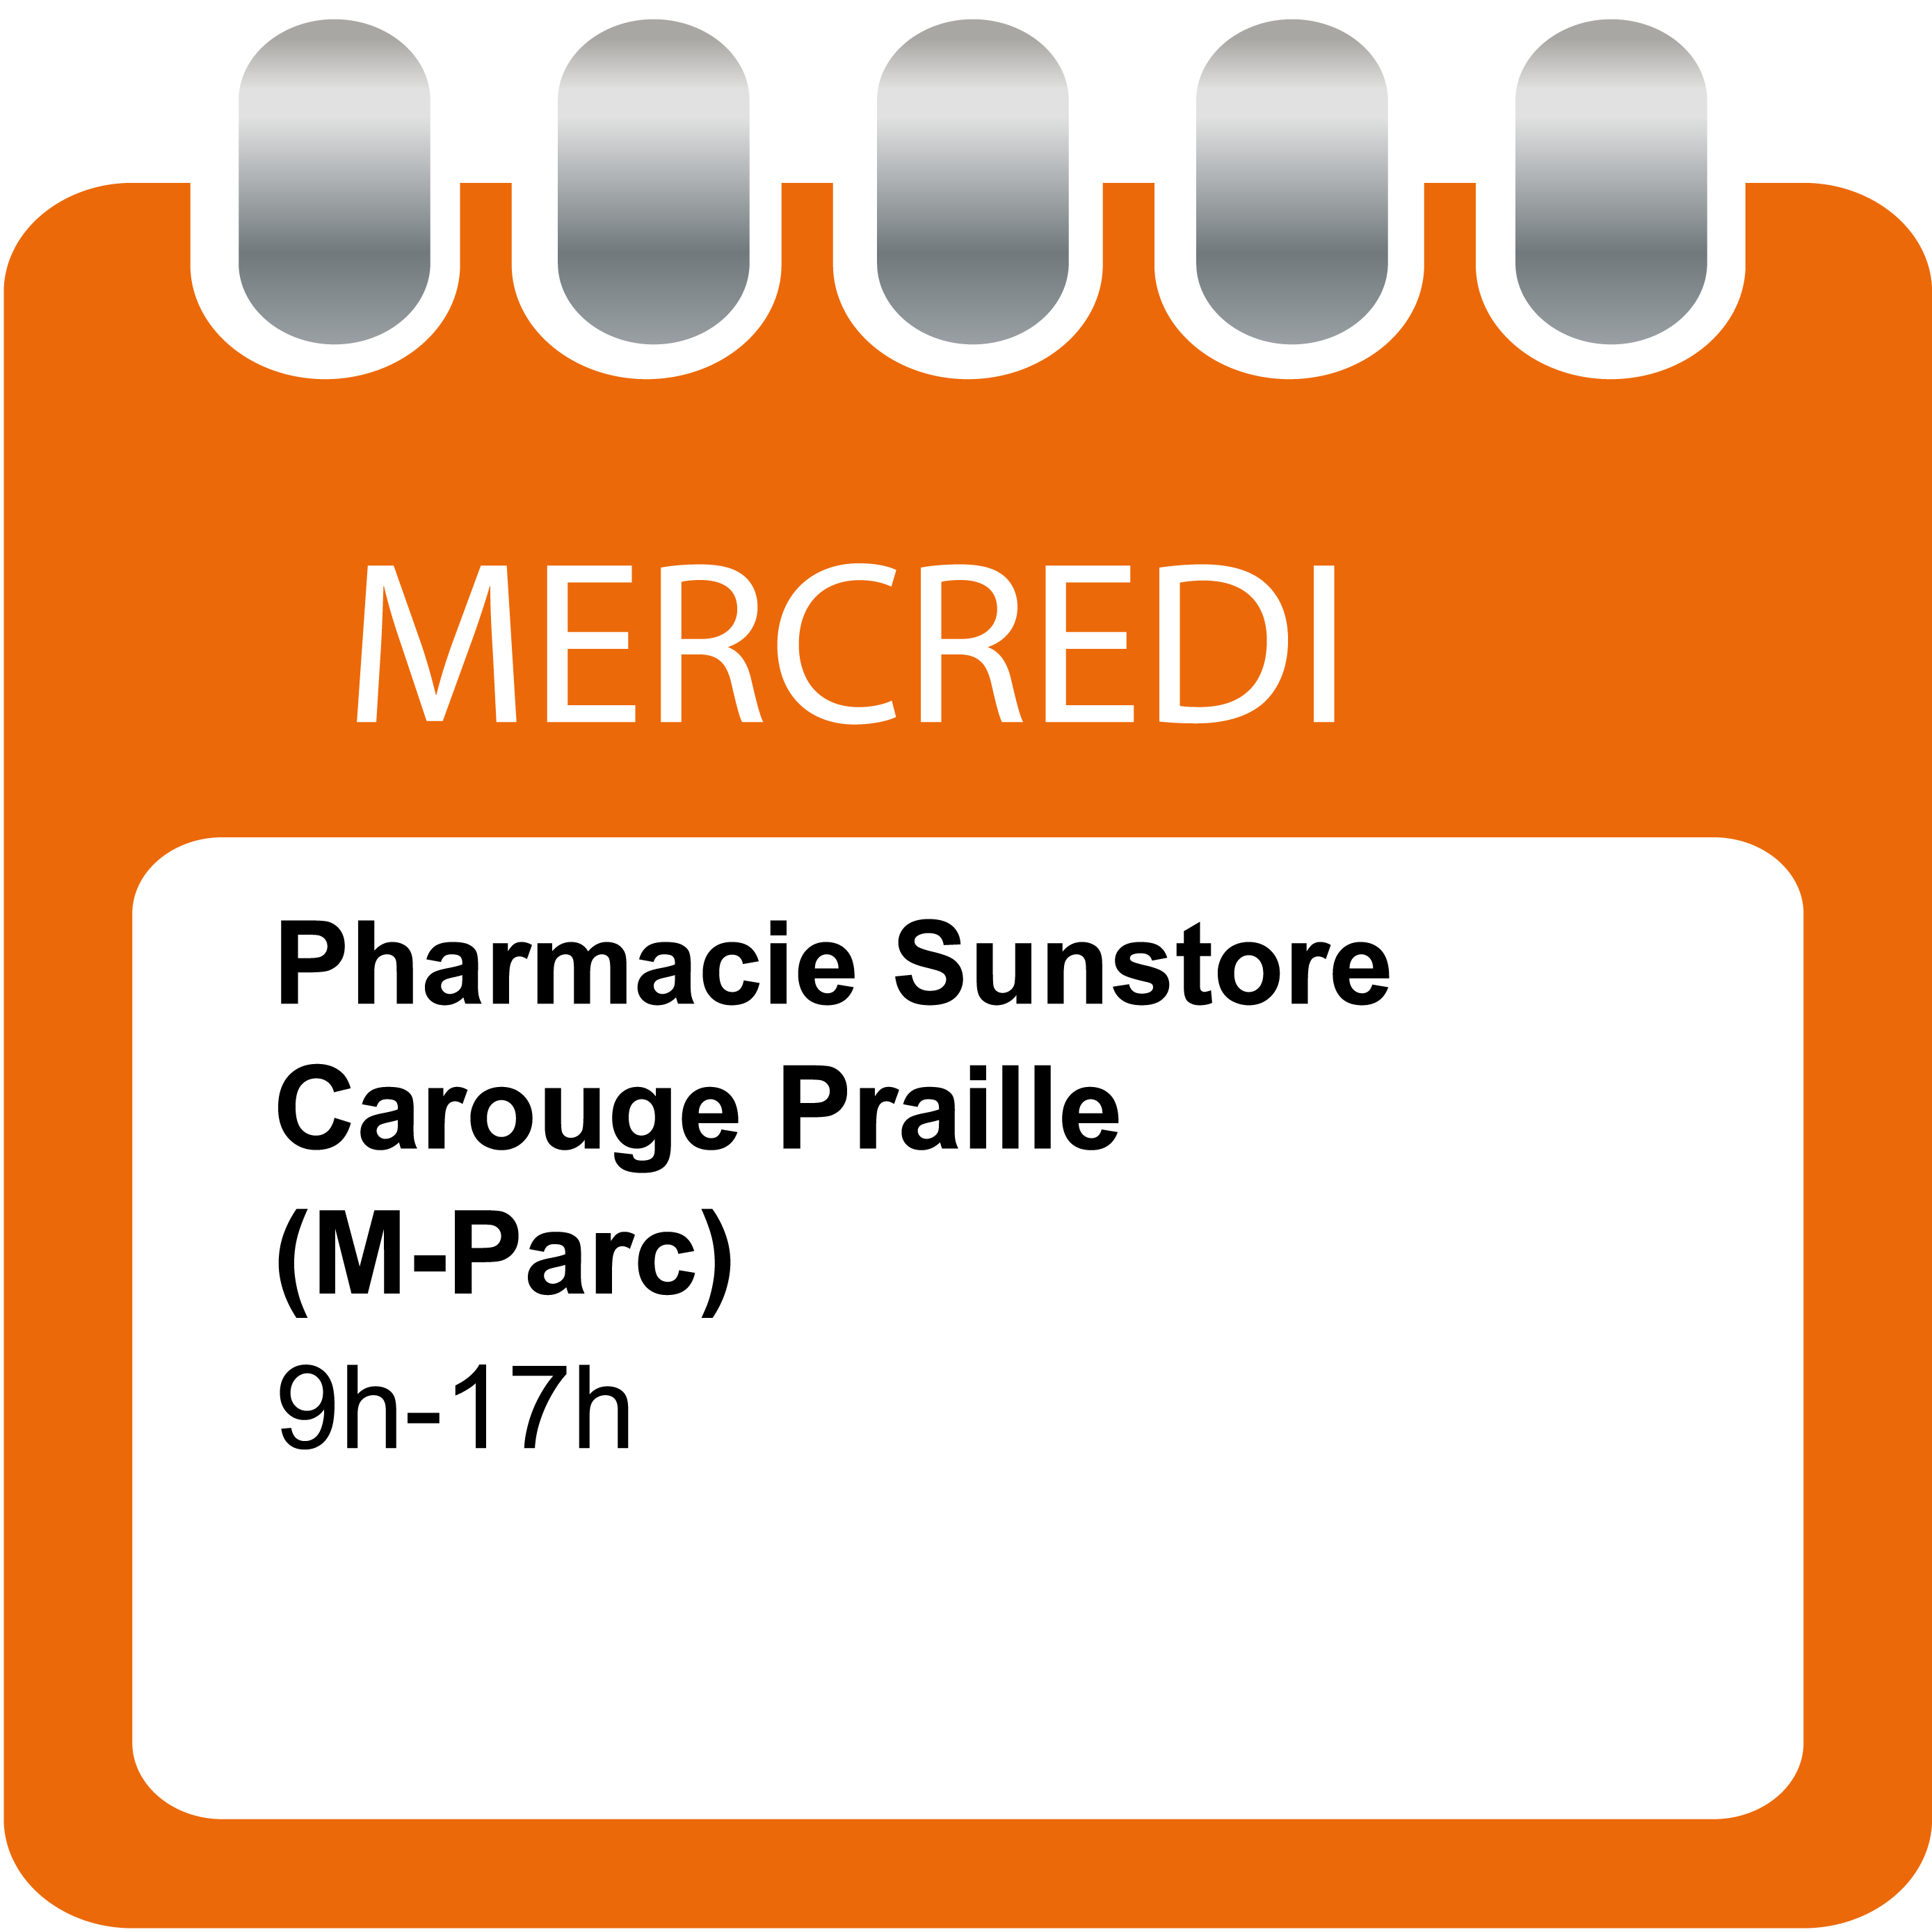 Mercredi - Pharmacie Sunstore Carouge Praille (M-Parc)